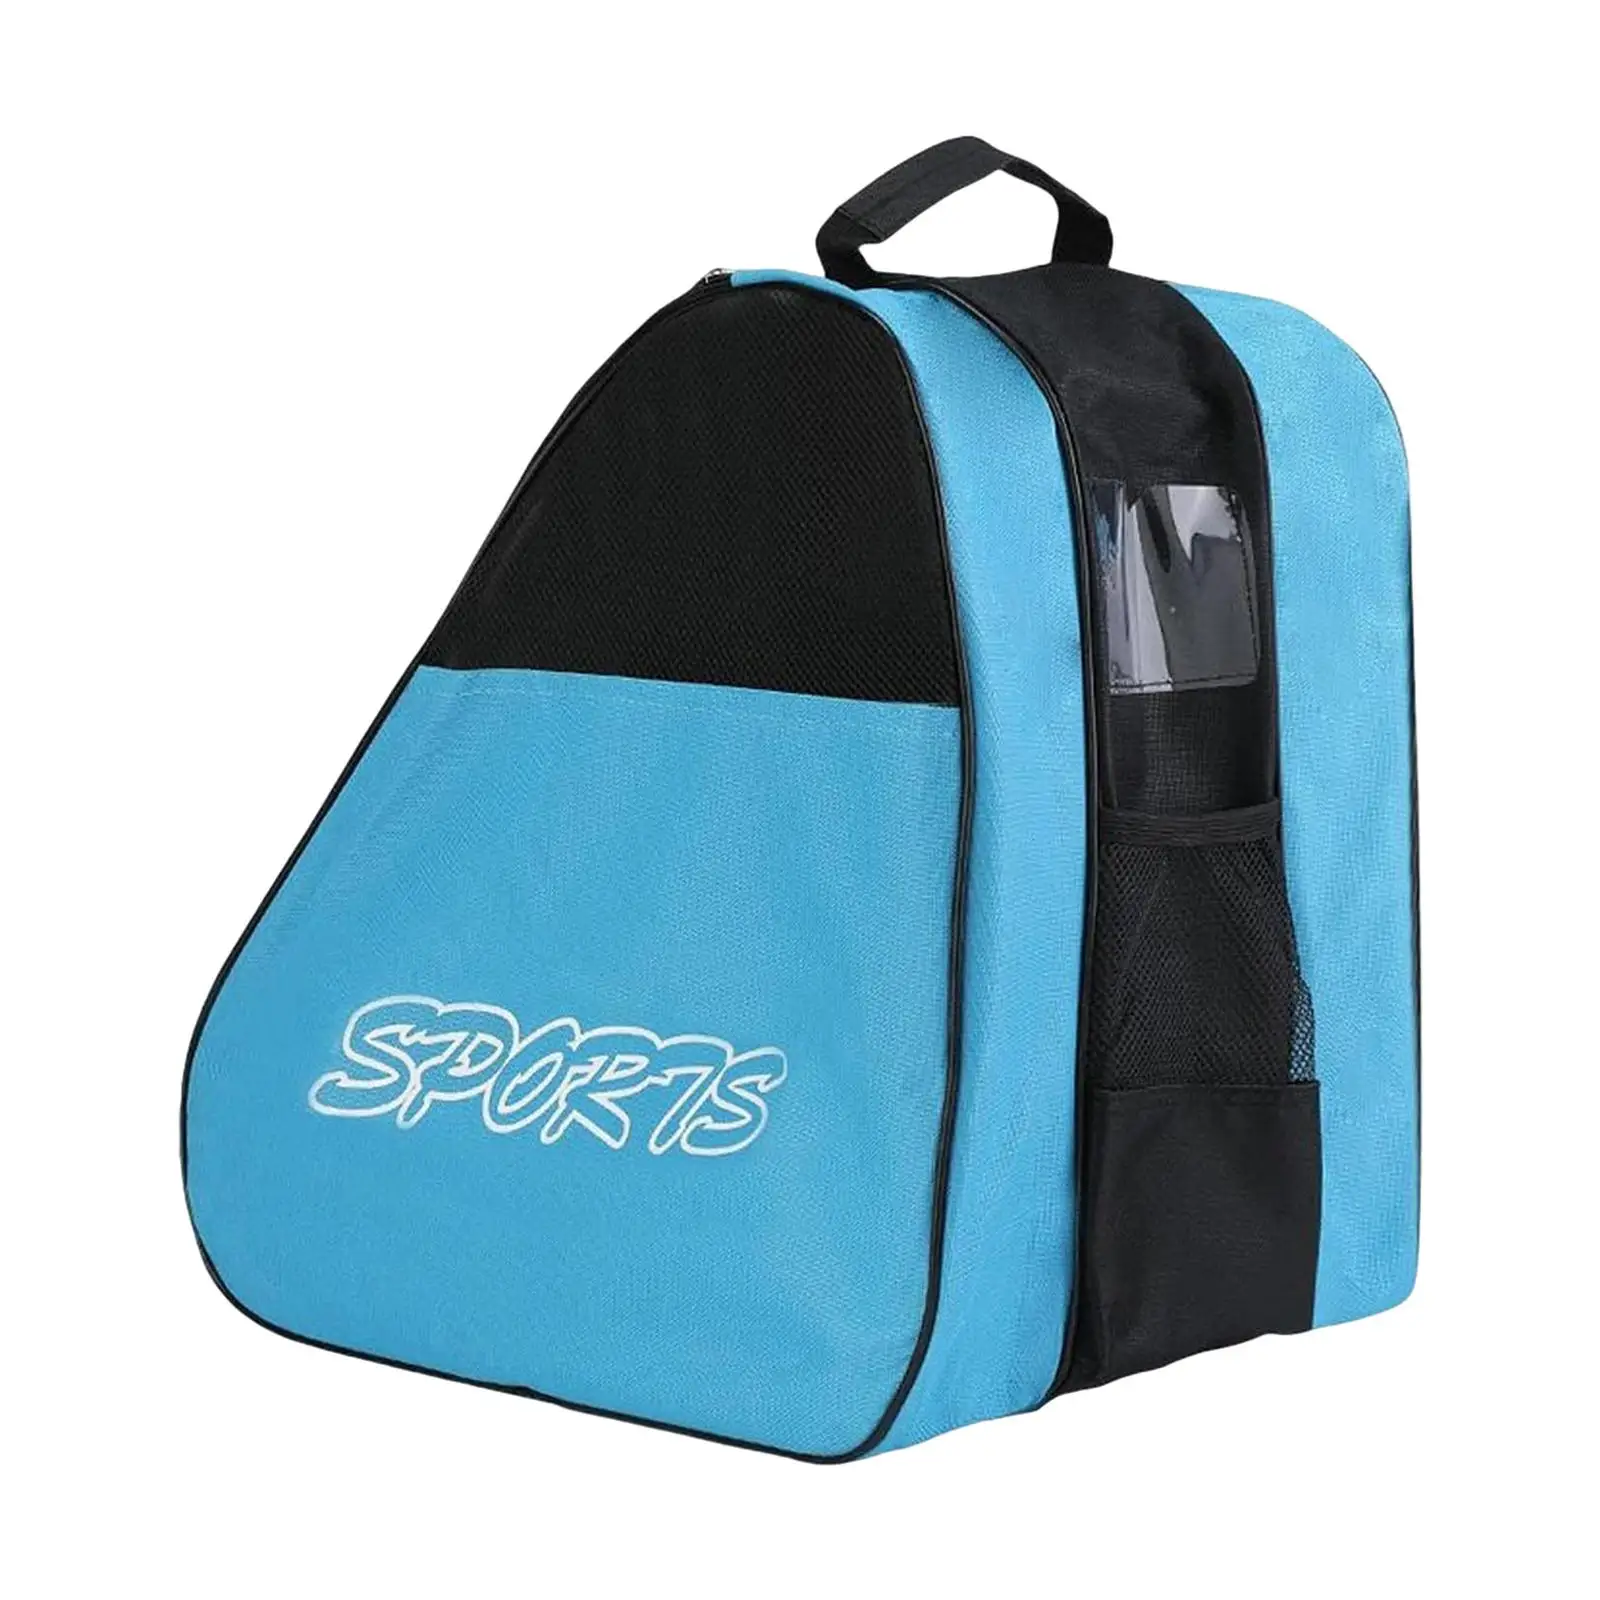 Roller Skates Bag Breathable Large Capacity Adjustable Strap Skating Handbag for Ice Hockey Skate Inline Skates Figure Skates